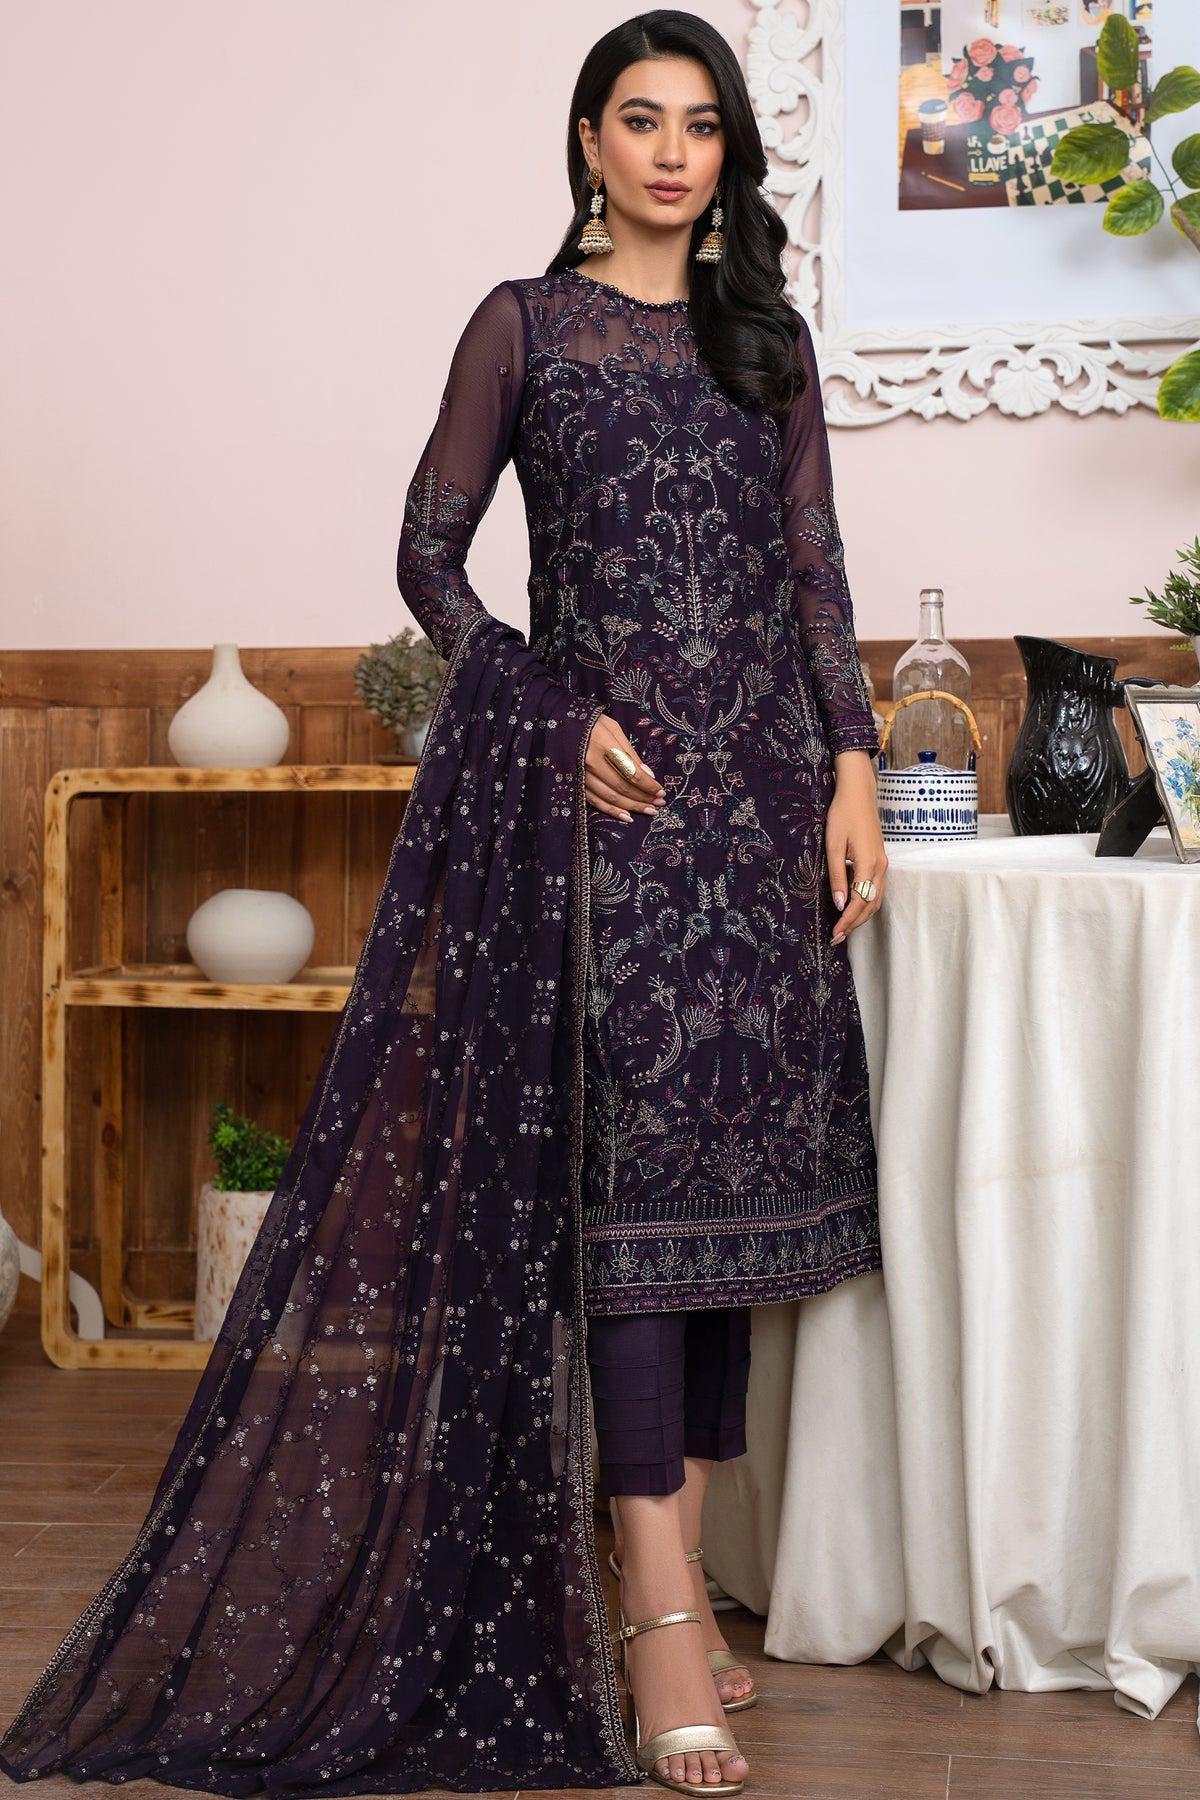 Shop Now, SCARLET - ZLM-05 - Meeral Luxury Formals 2023 - Zarif - Shahana Collection UK - Wedding and Bridal Dresses - Pakistani Dresses in UAE - Shahana UK